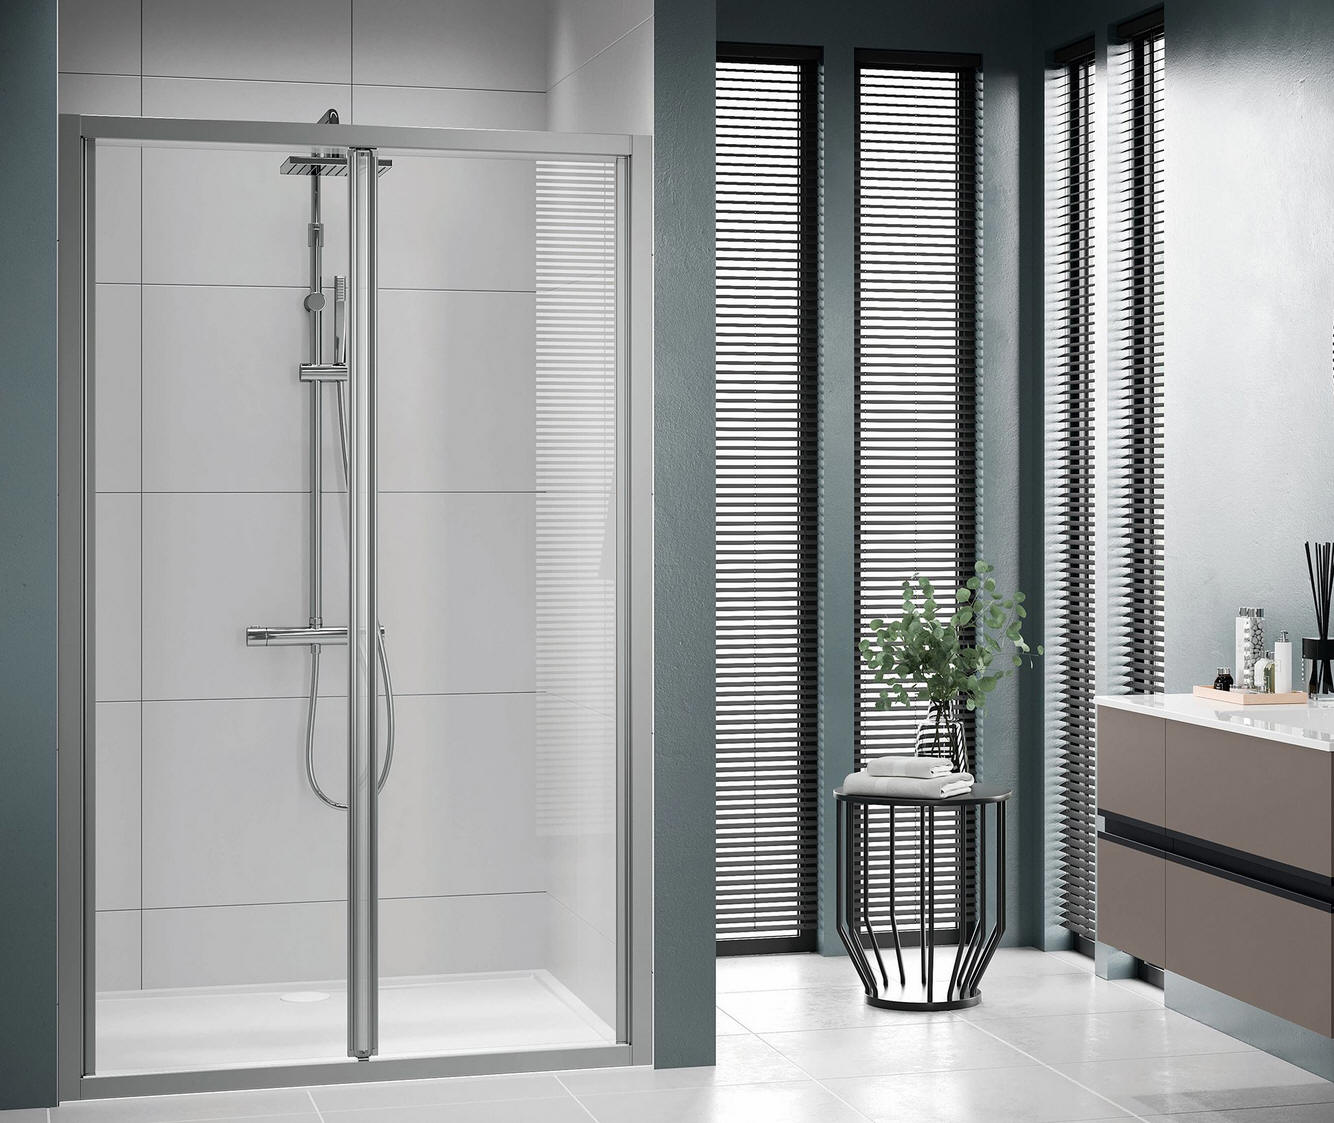 Novellini LUNES 2.0 S bi-folding shower door shown in alcove setting